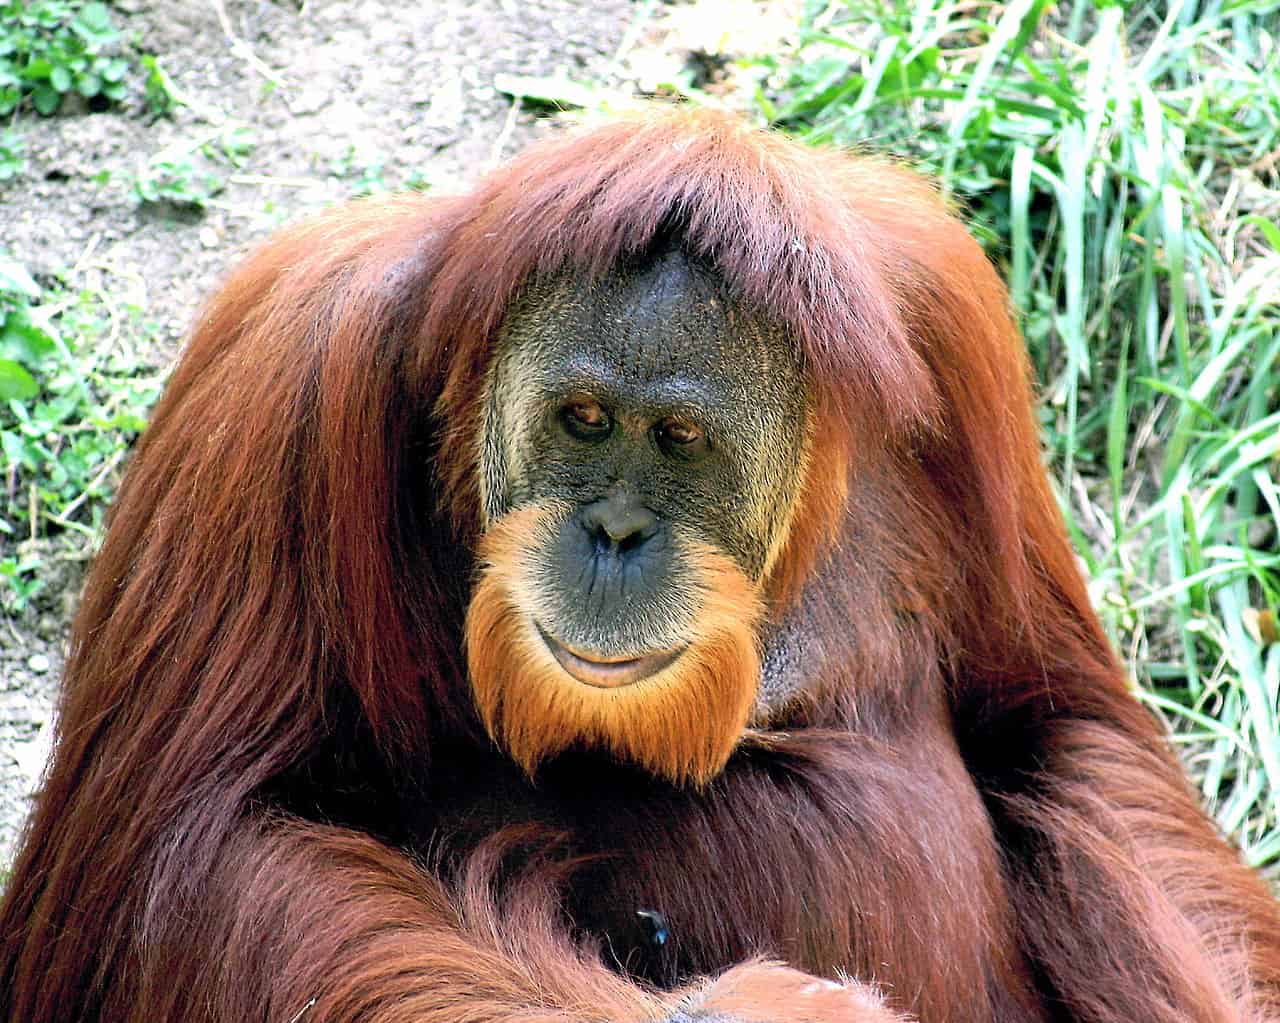 9 Individu Orangutan Asal Indonesia Direpatriasi dari Malaysia